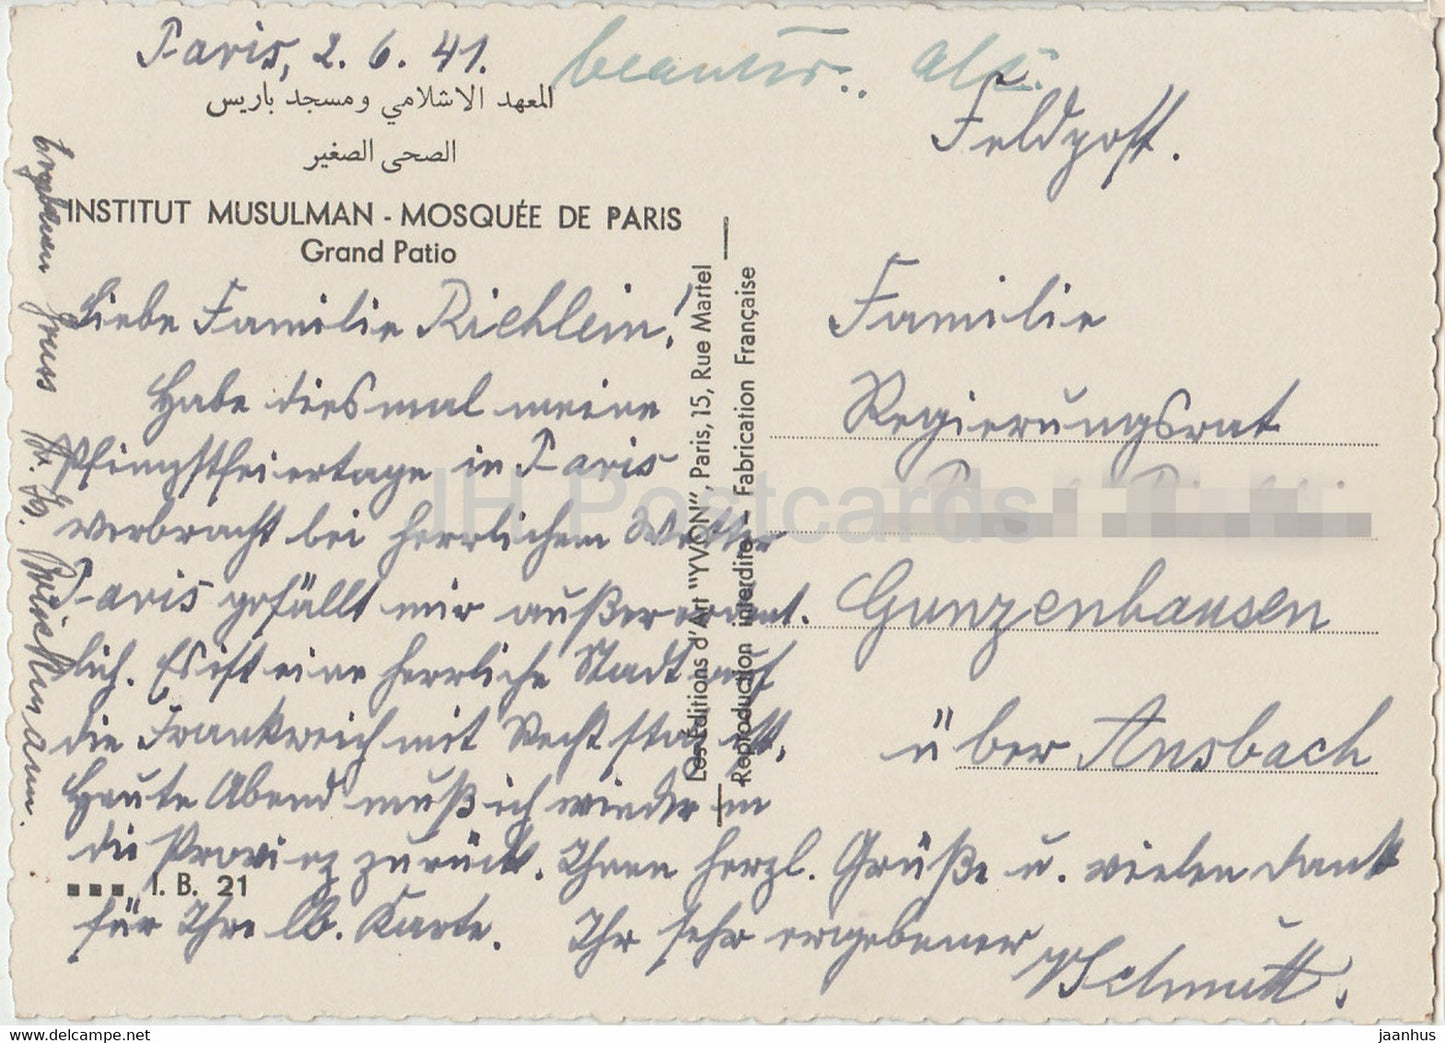 Paris – Institut Musulman – Mosquee de Paris – Grand Patio – 1941 – Frankreich – gebraucht